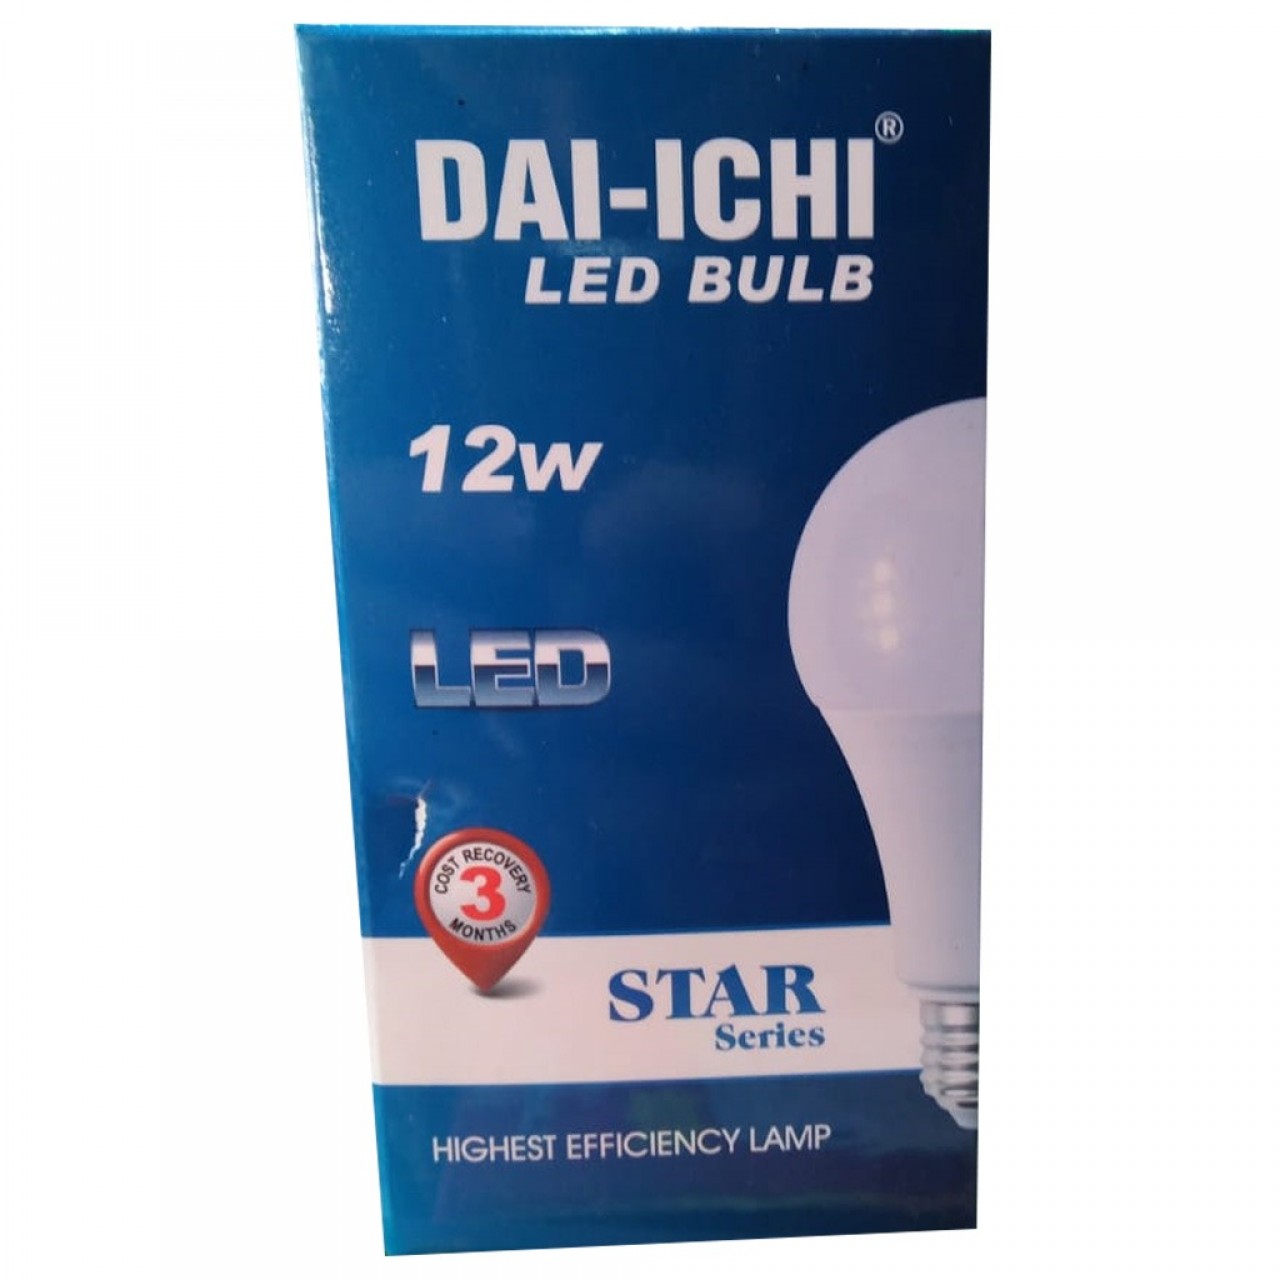 DAI-ICHI Led Bulb - 12 Watt - 3 Months Cost Recovery